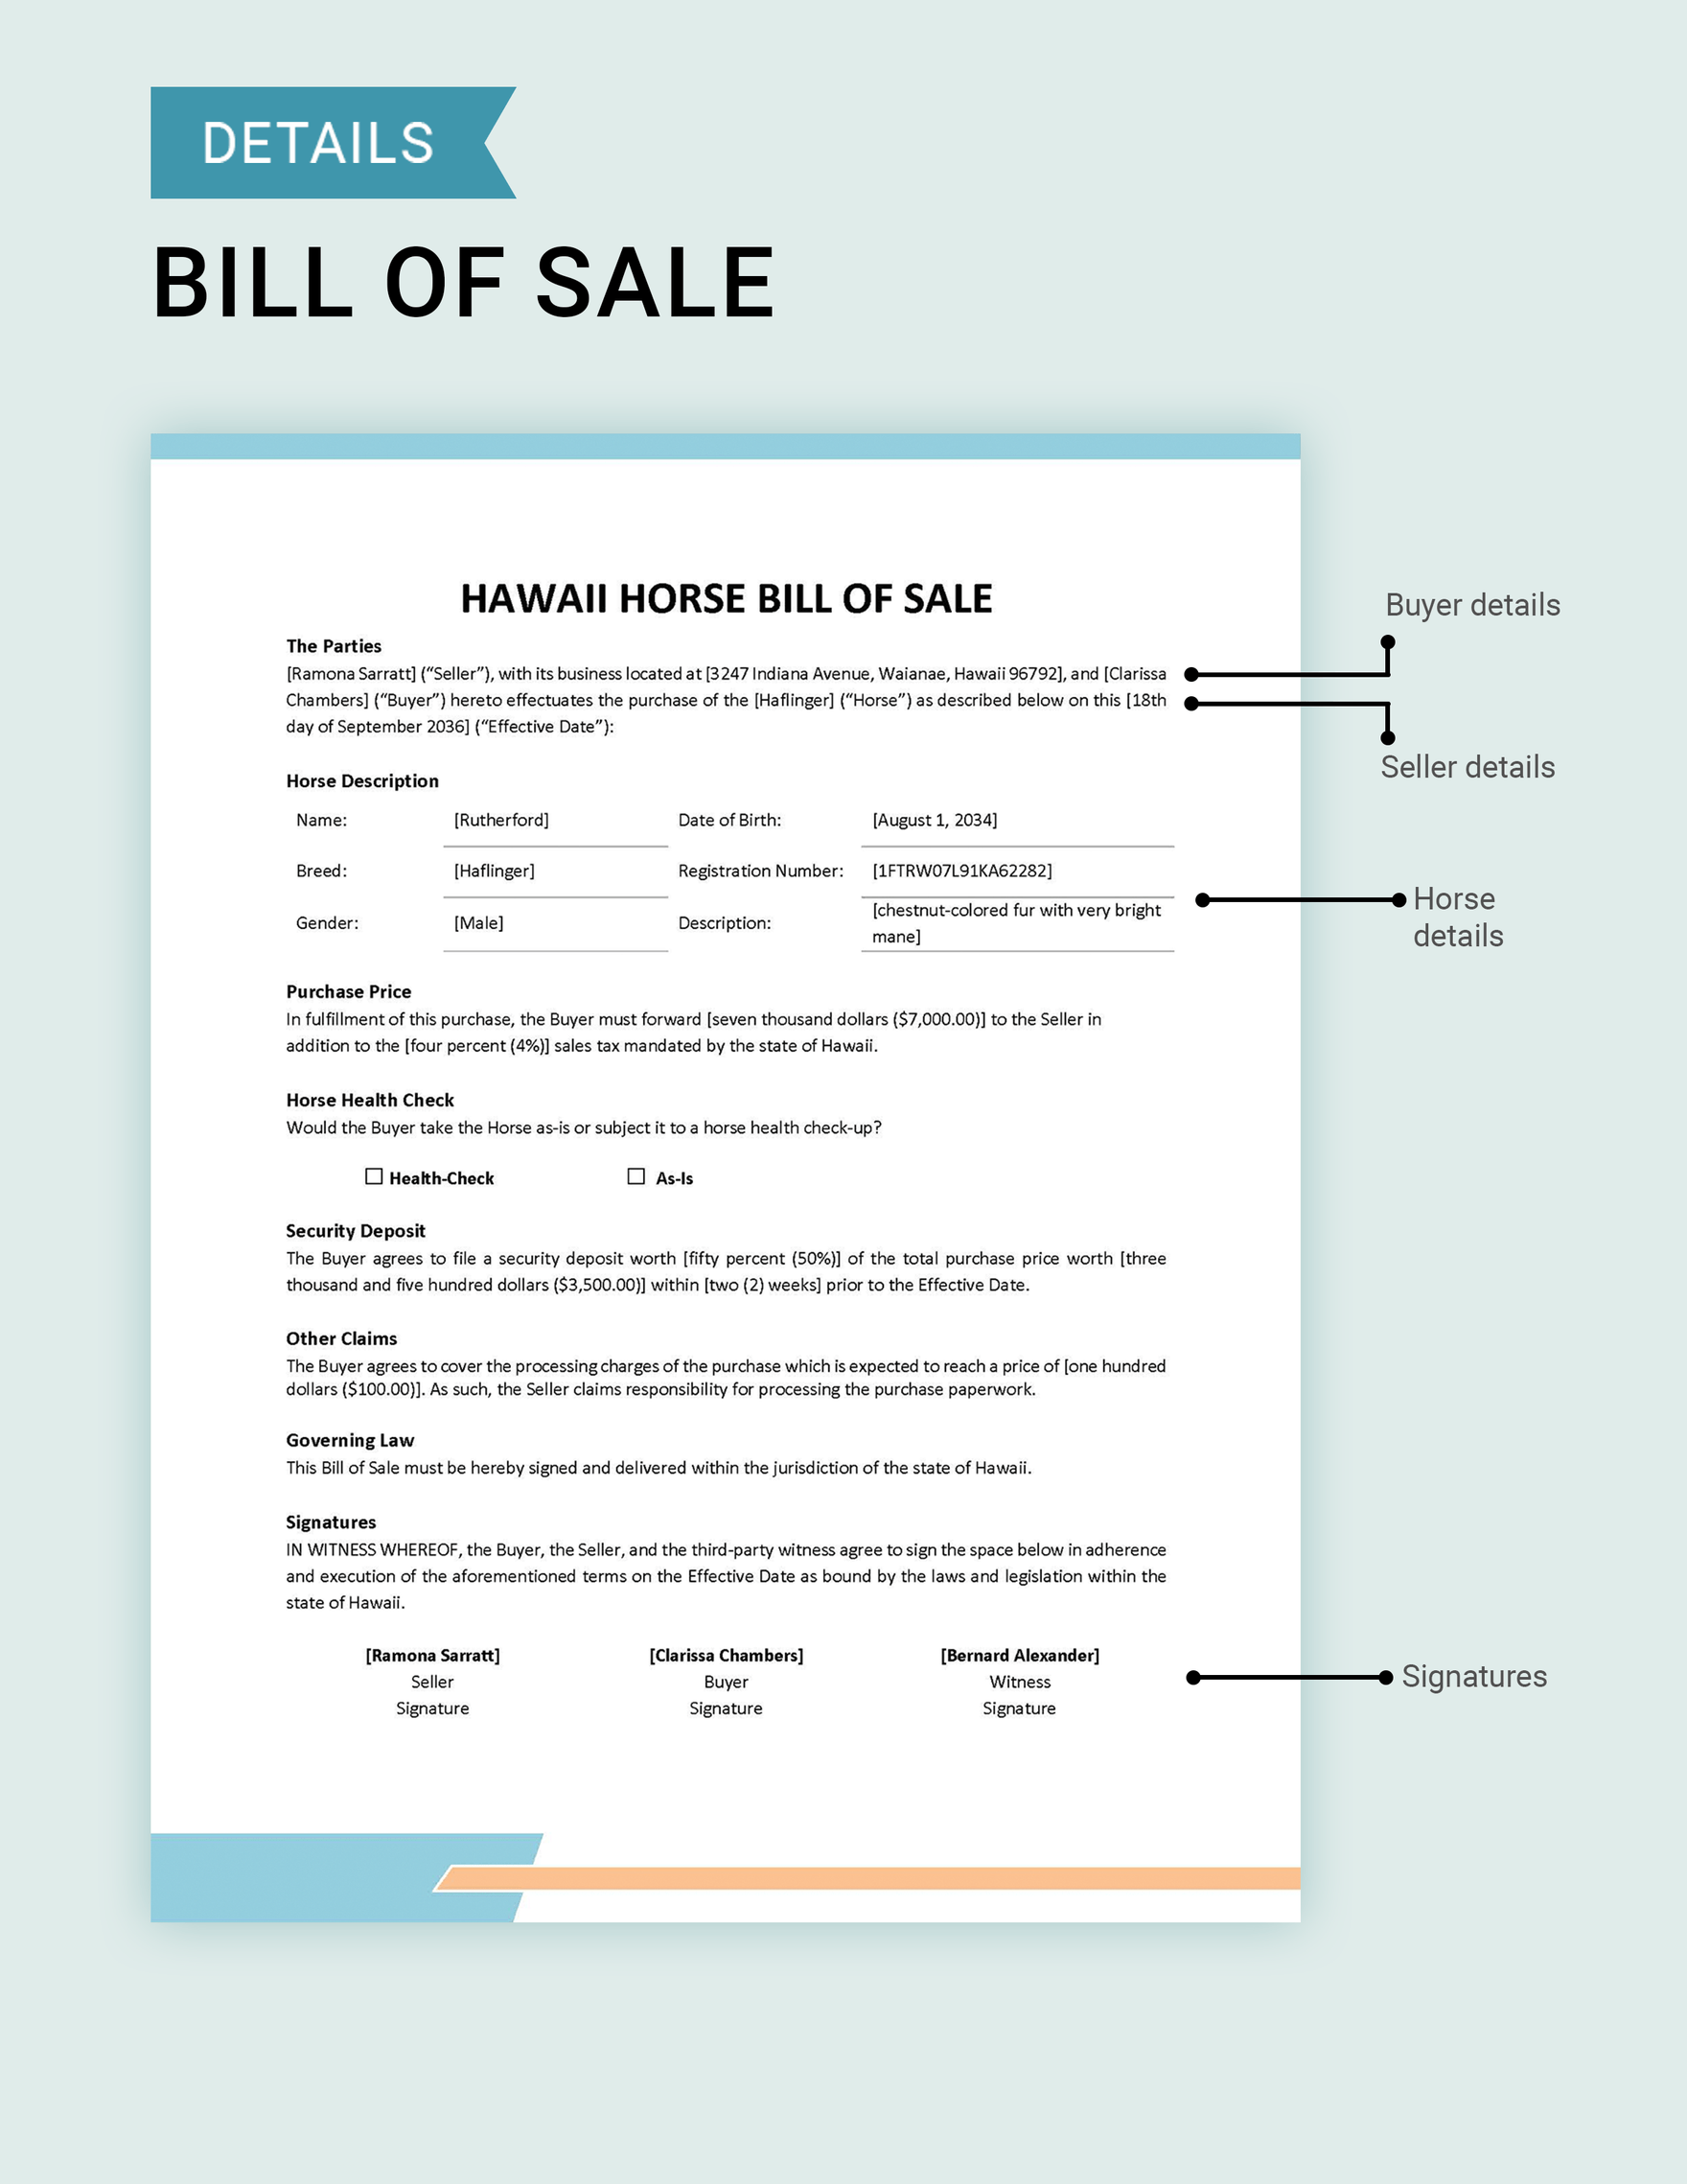 Hawaii Horse Bill of Sale Template